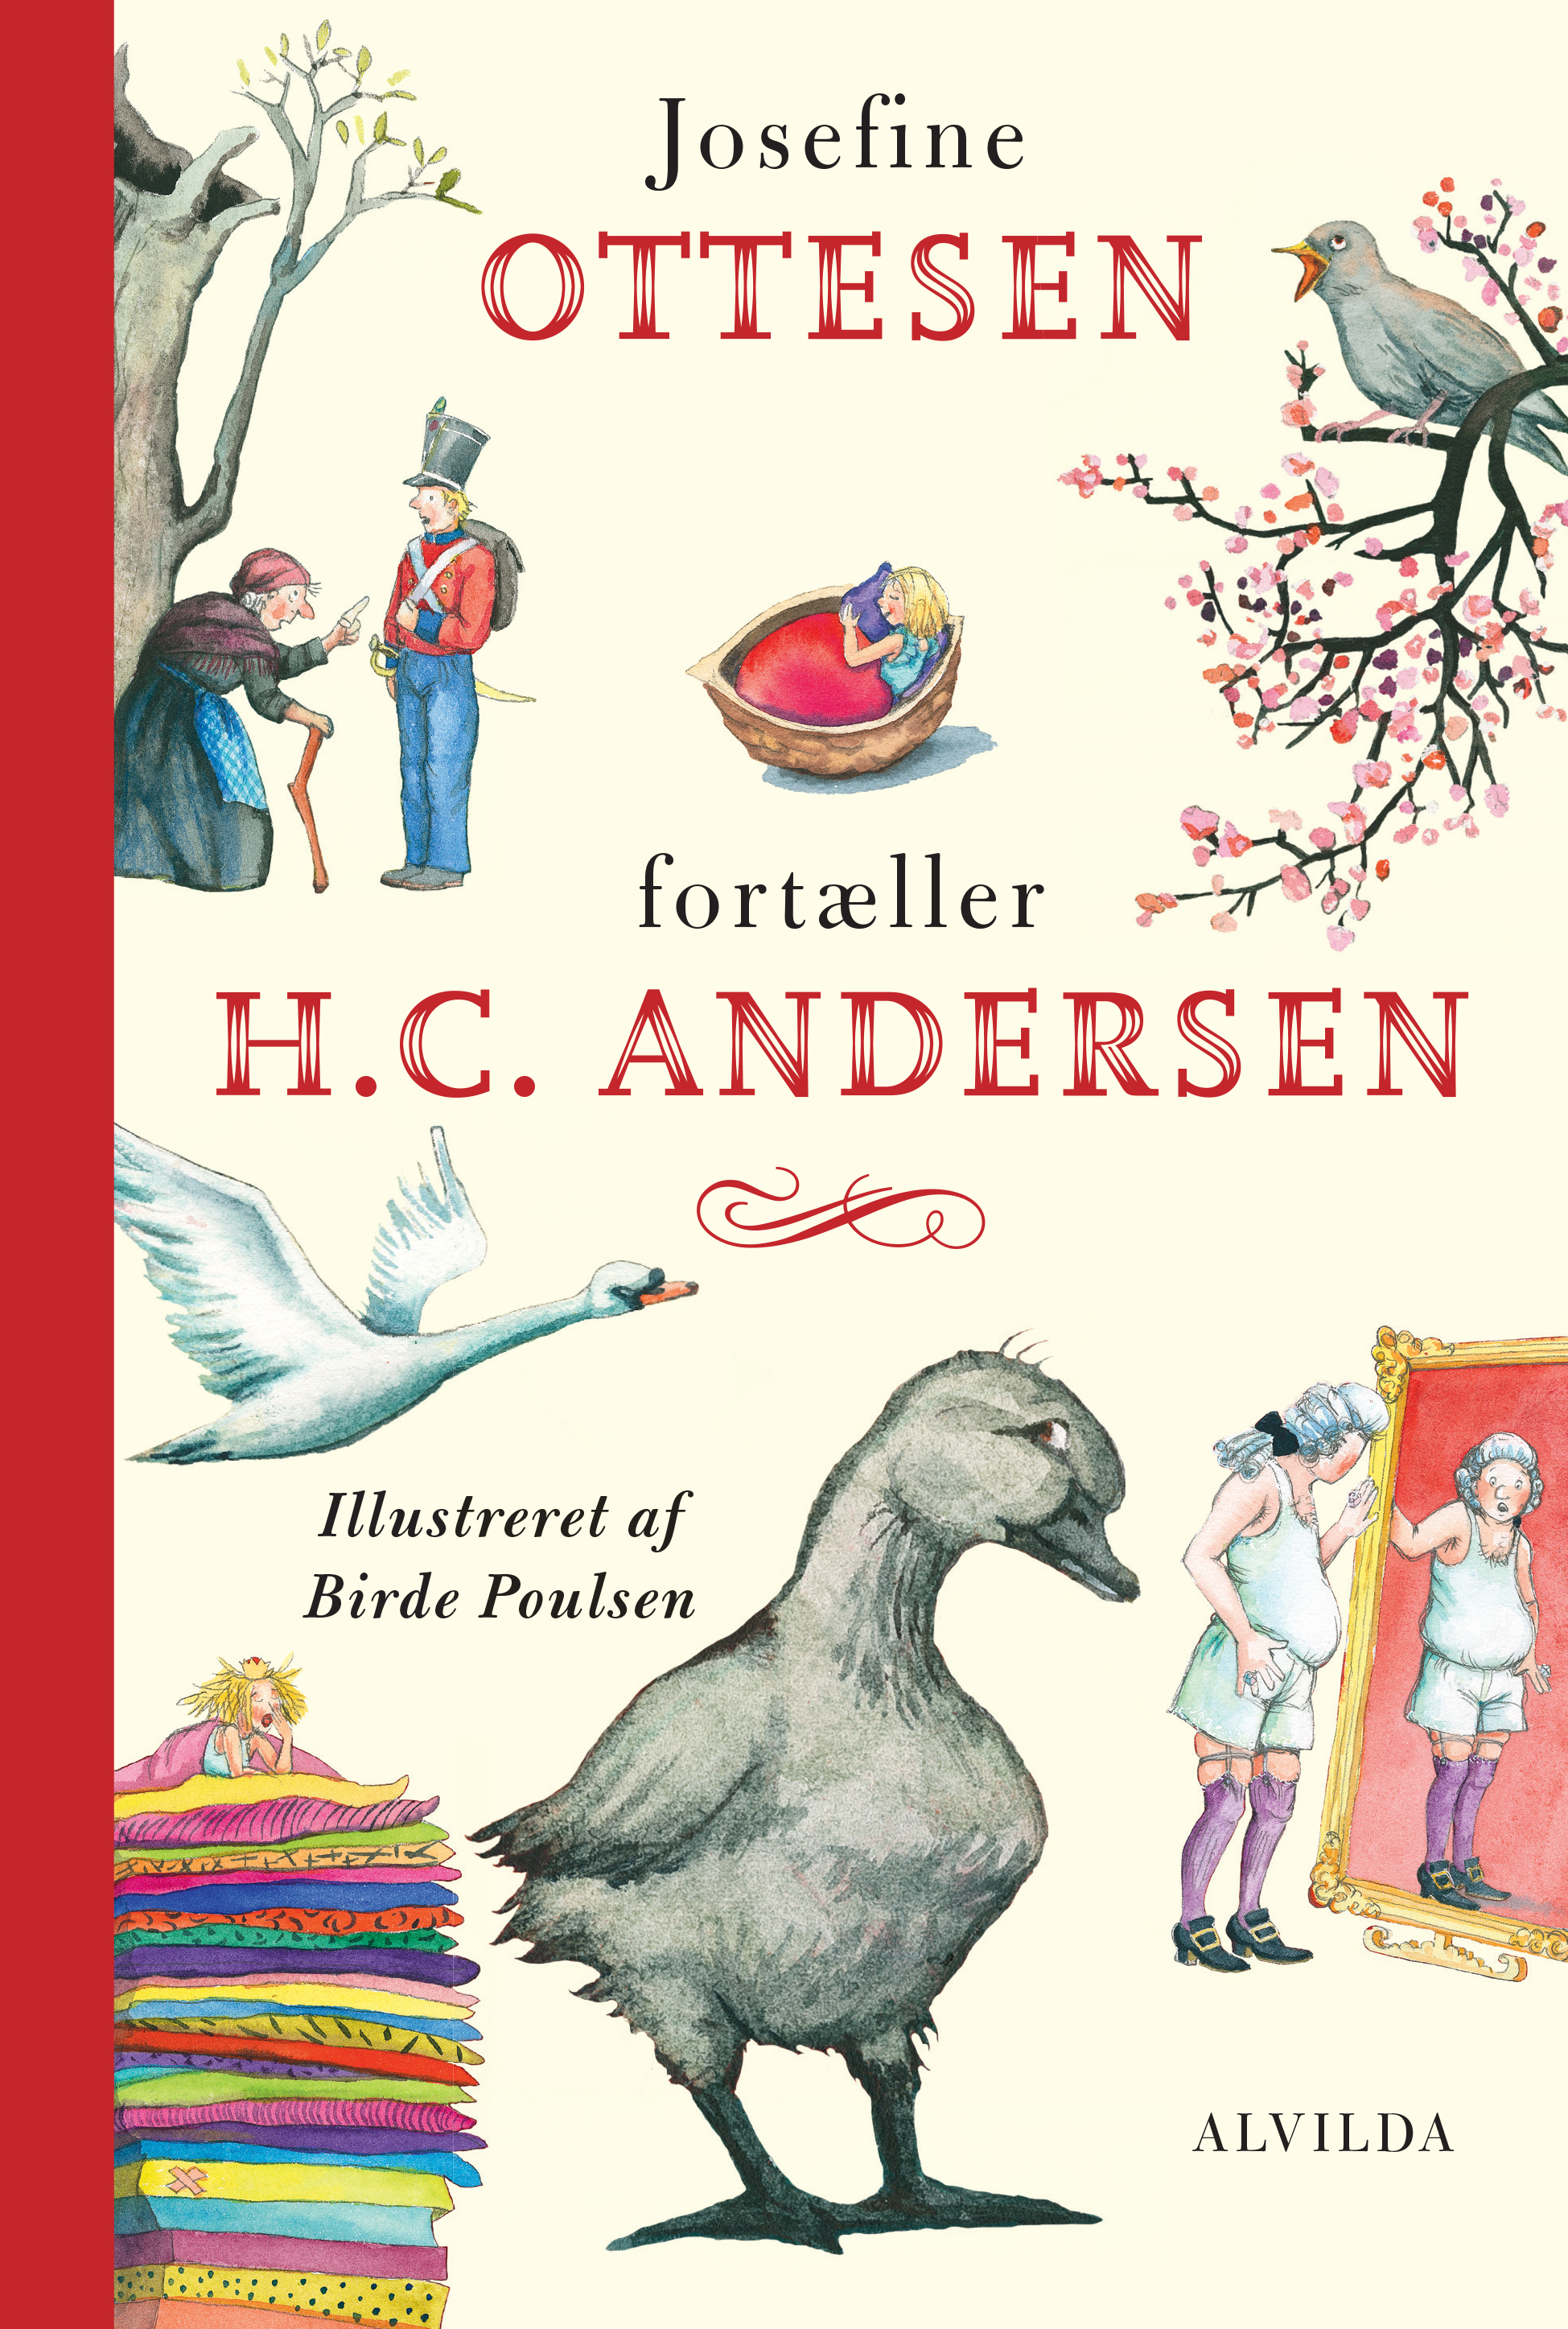 Josefine Ottesen fortæller H.C. Andersen